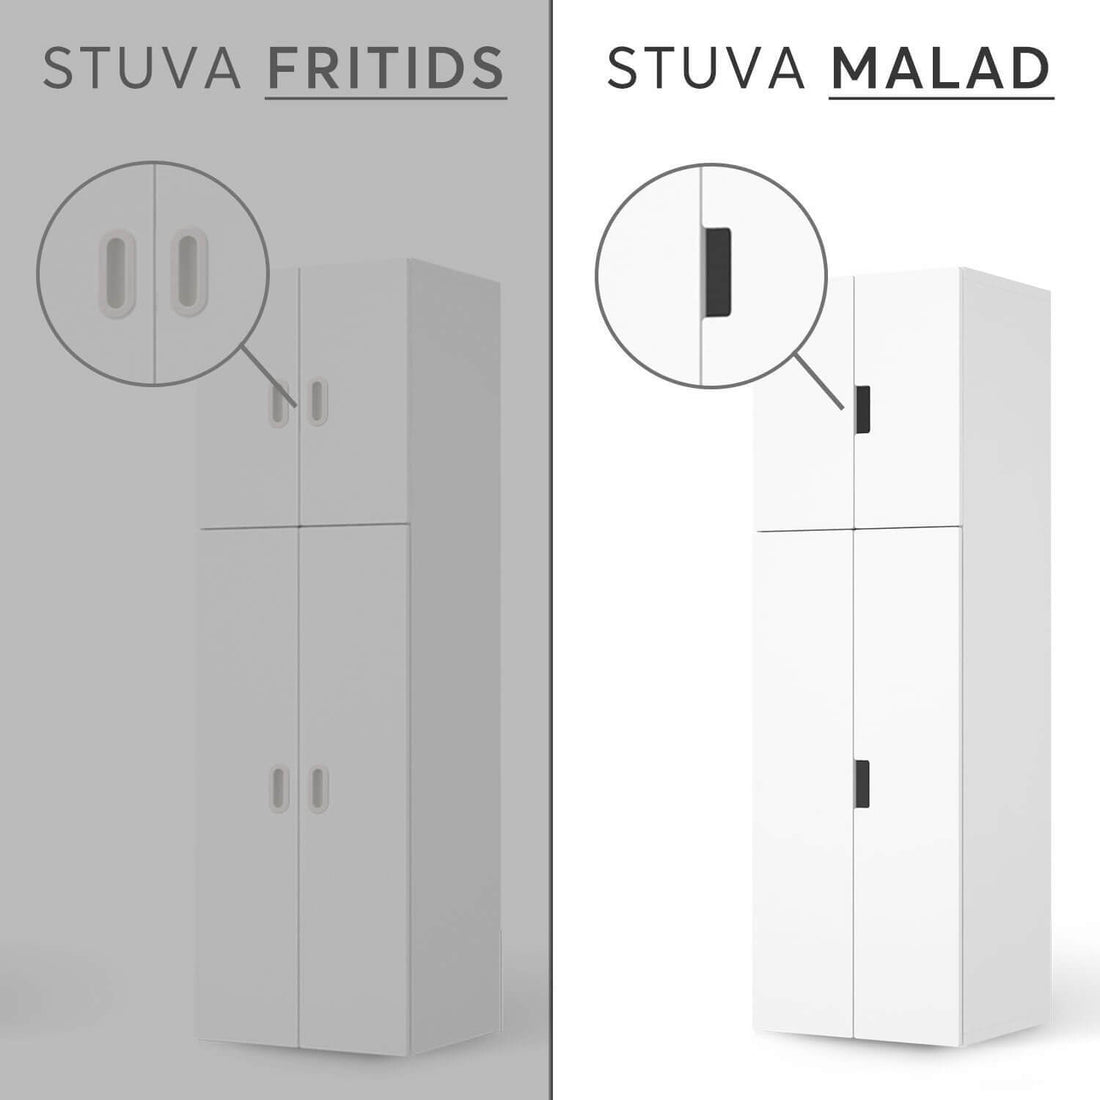 Vergleich IKEA Stuva Malad / Fritids - Palmen mint